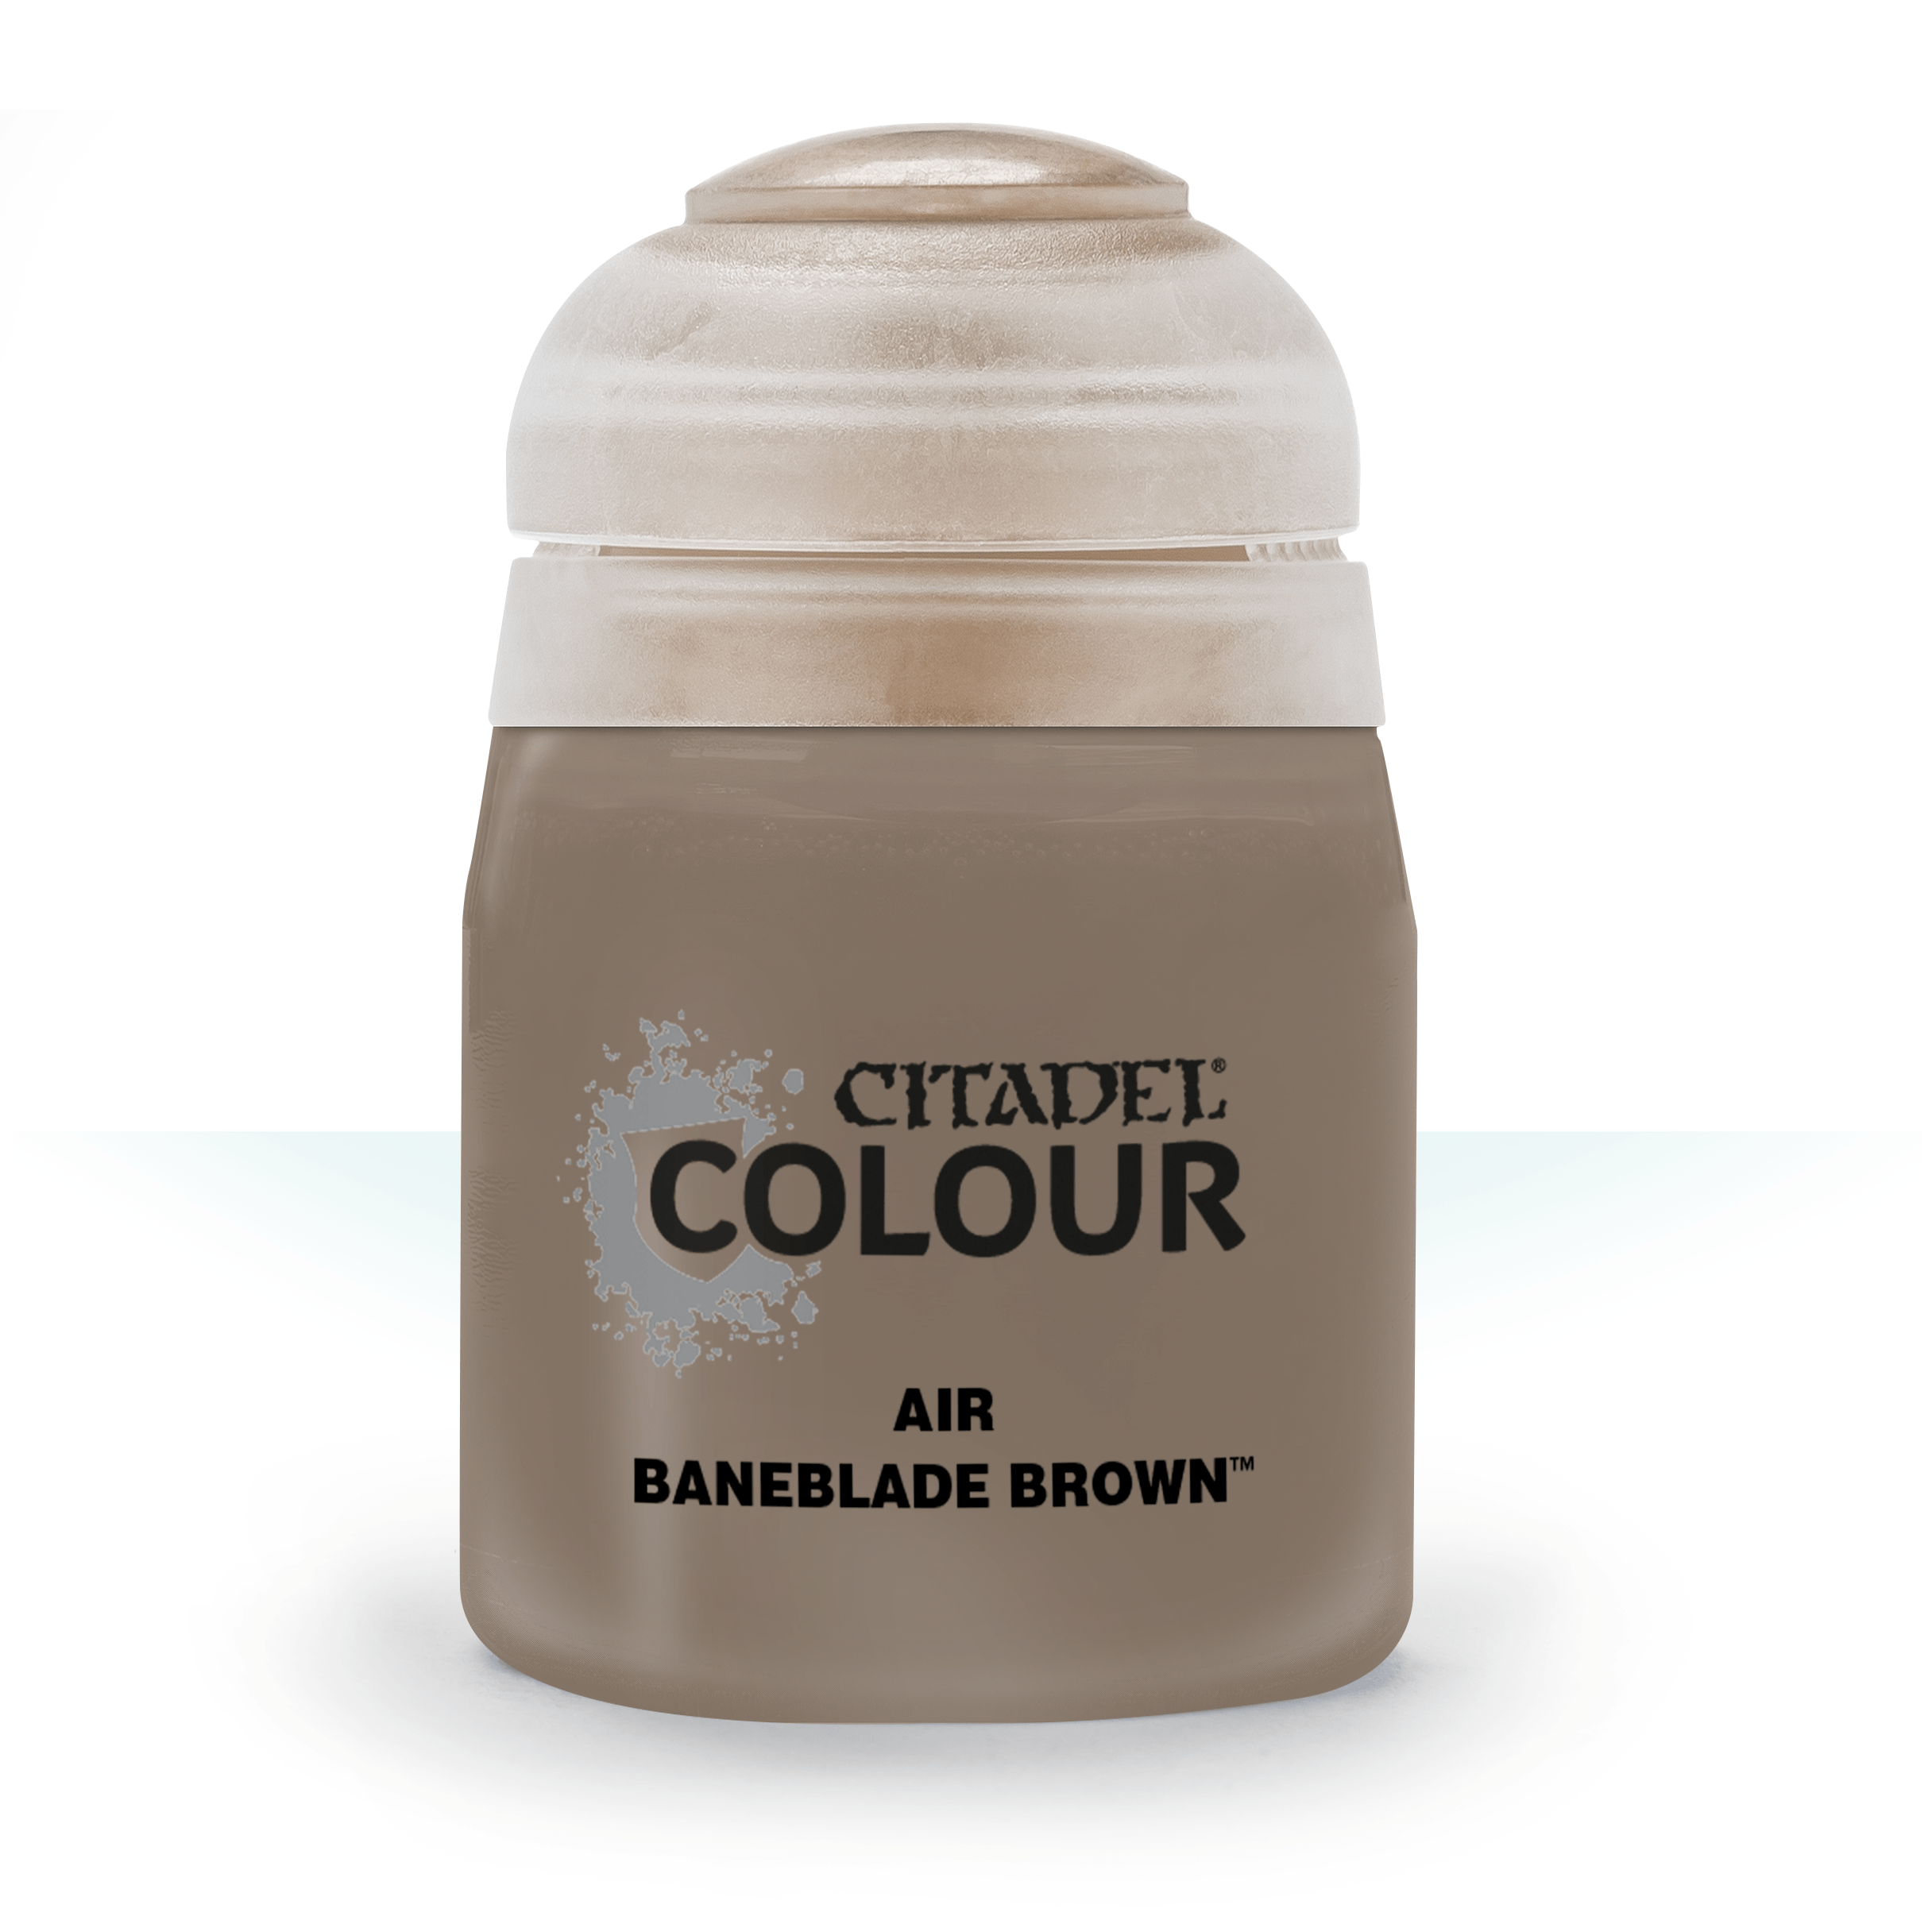 Baneblade Brown - Citadel Air Colour